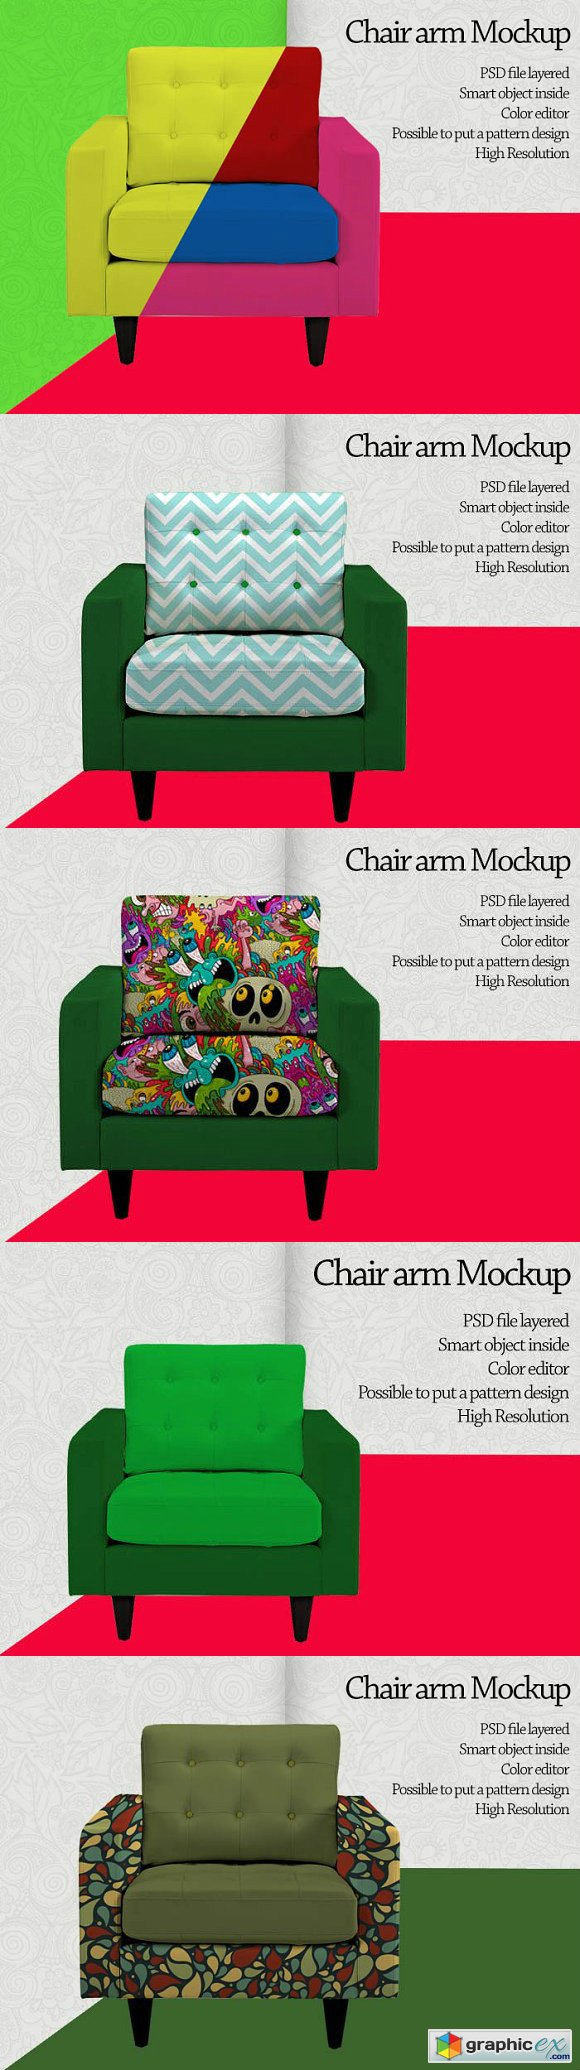 Chair arm Mockup